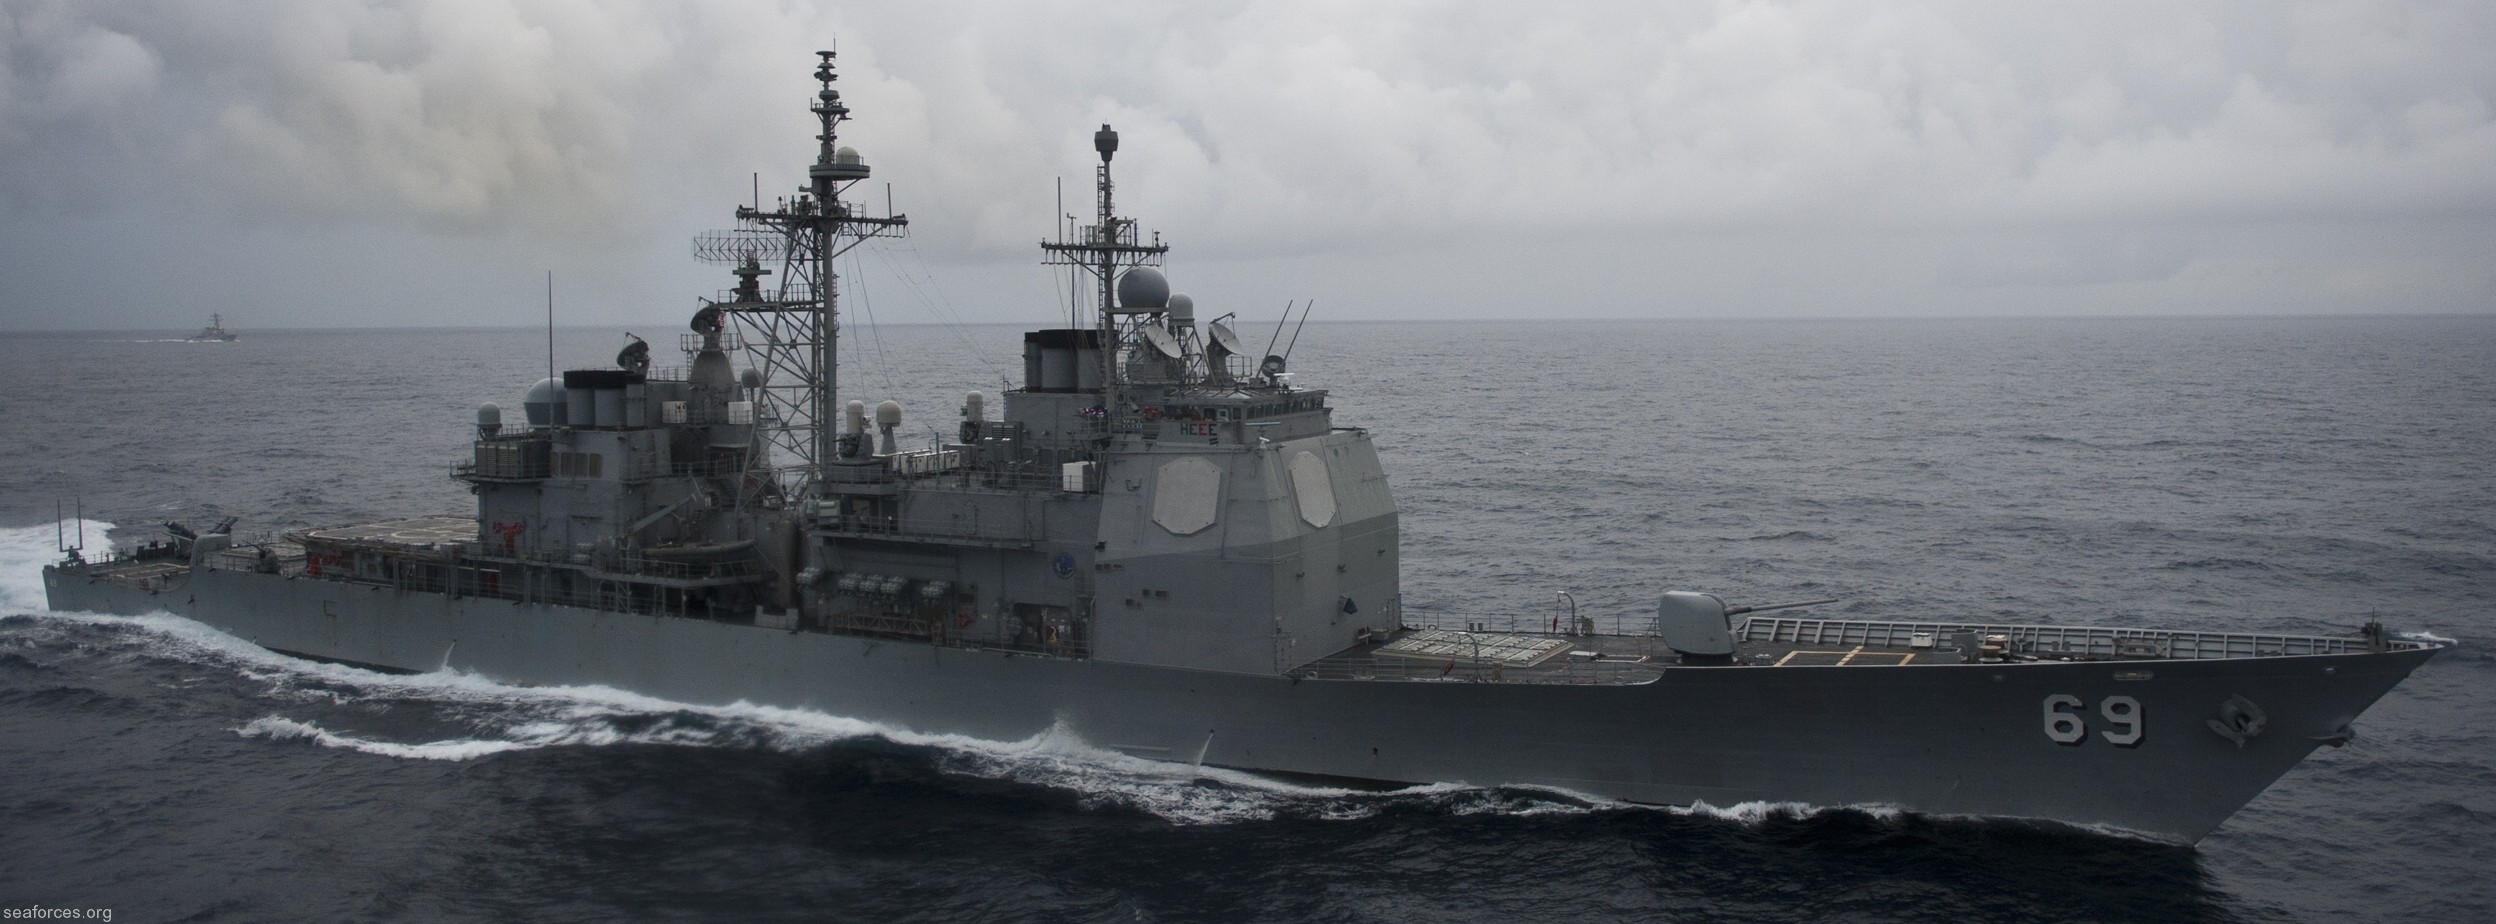 cg-69 uss vicksburg ticonderoga class guided missile cruiser us navy 20